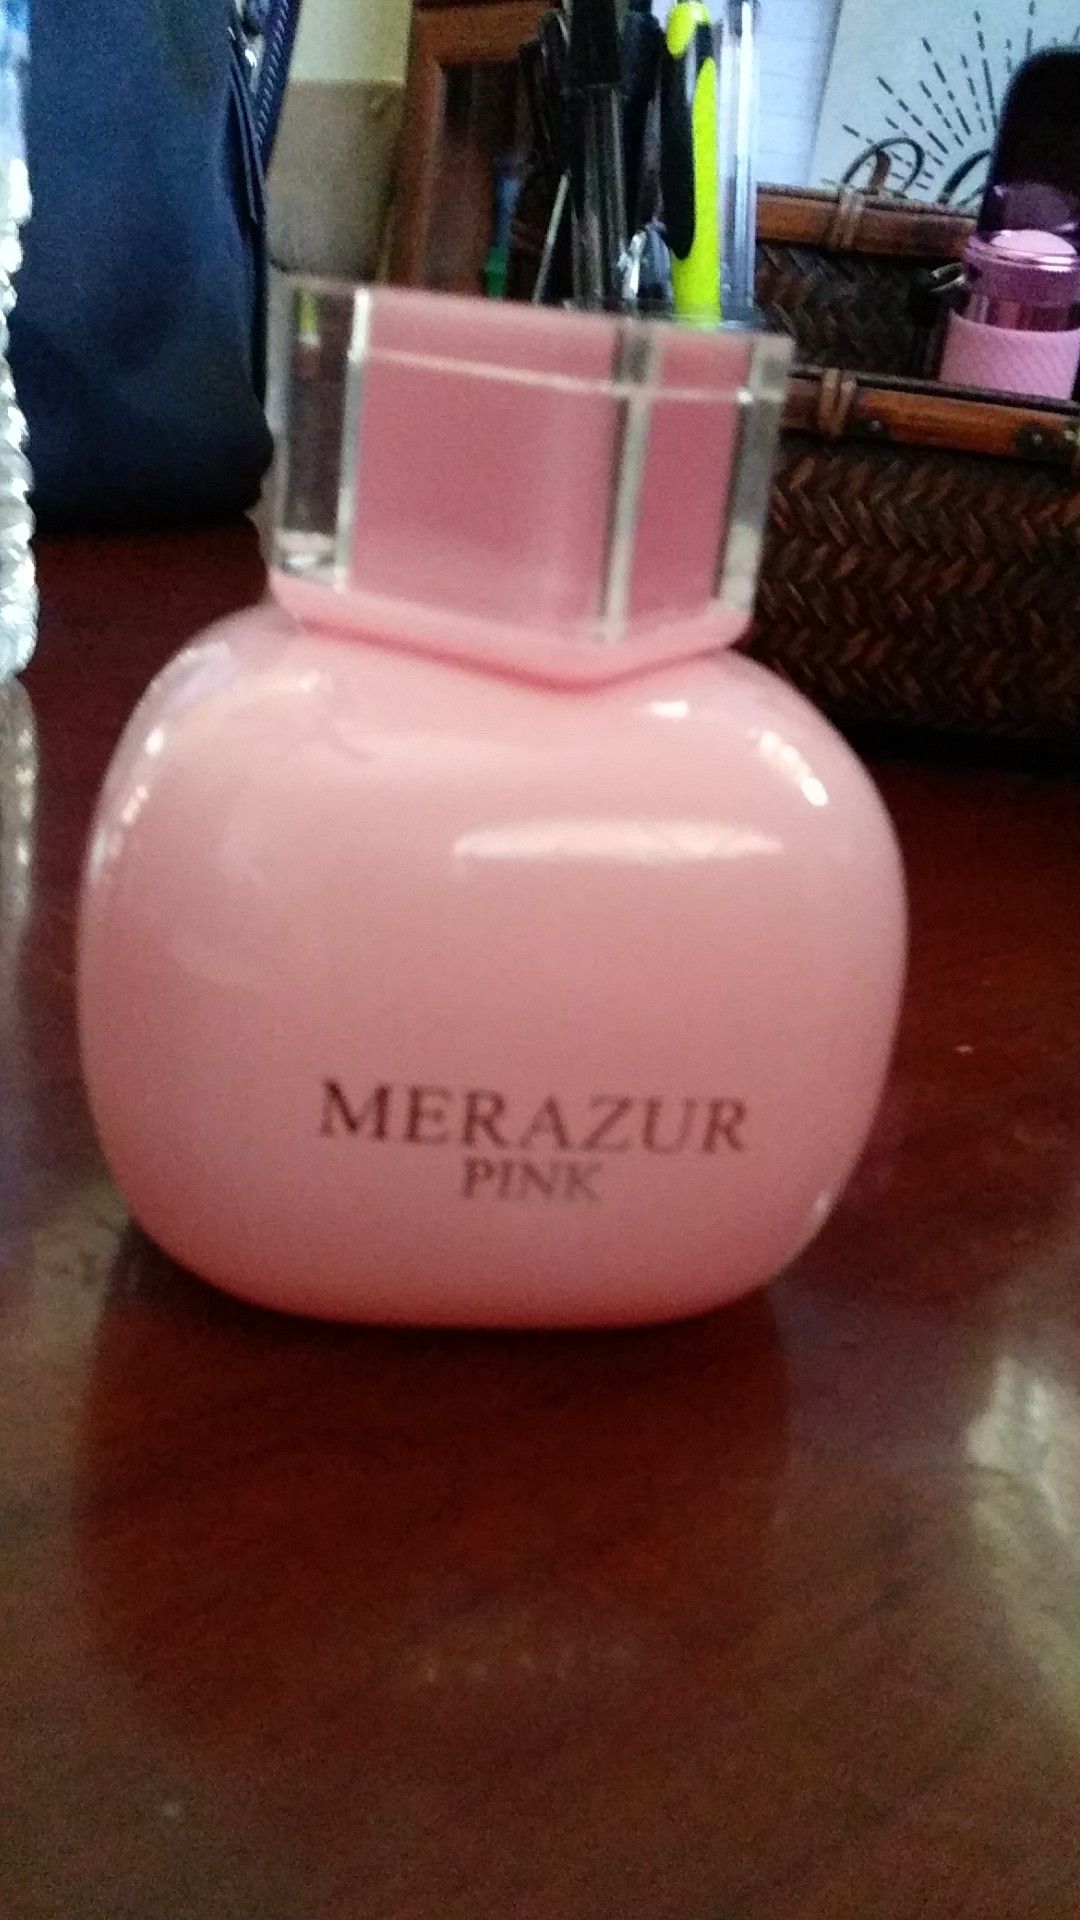 Merzure perfume by Estee lauder- new